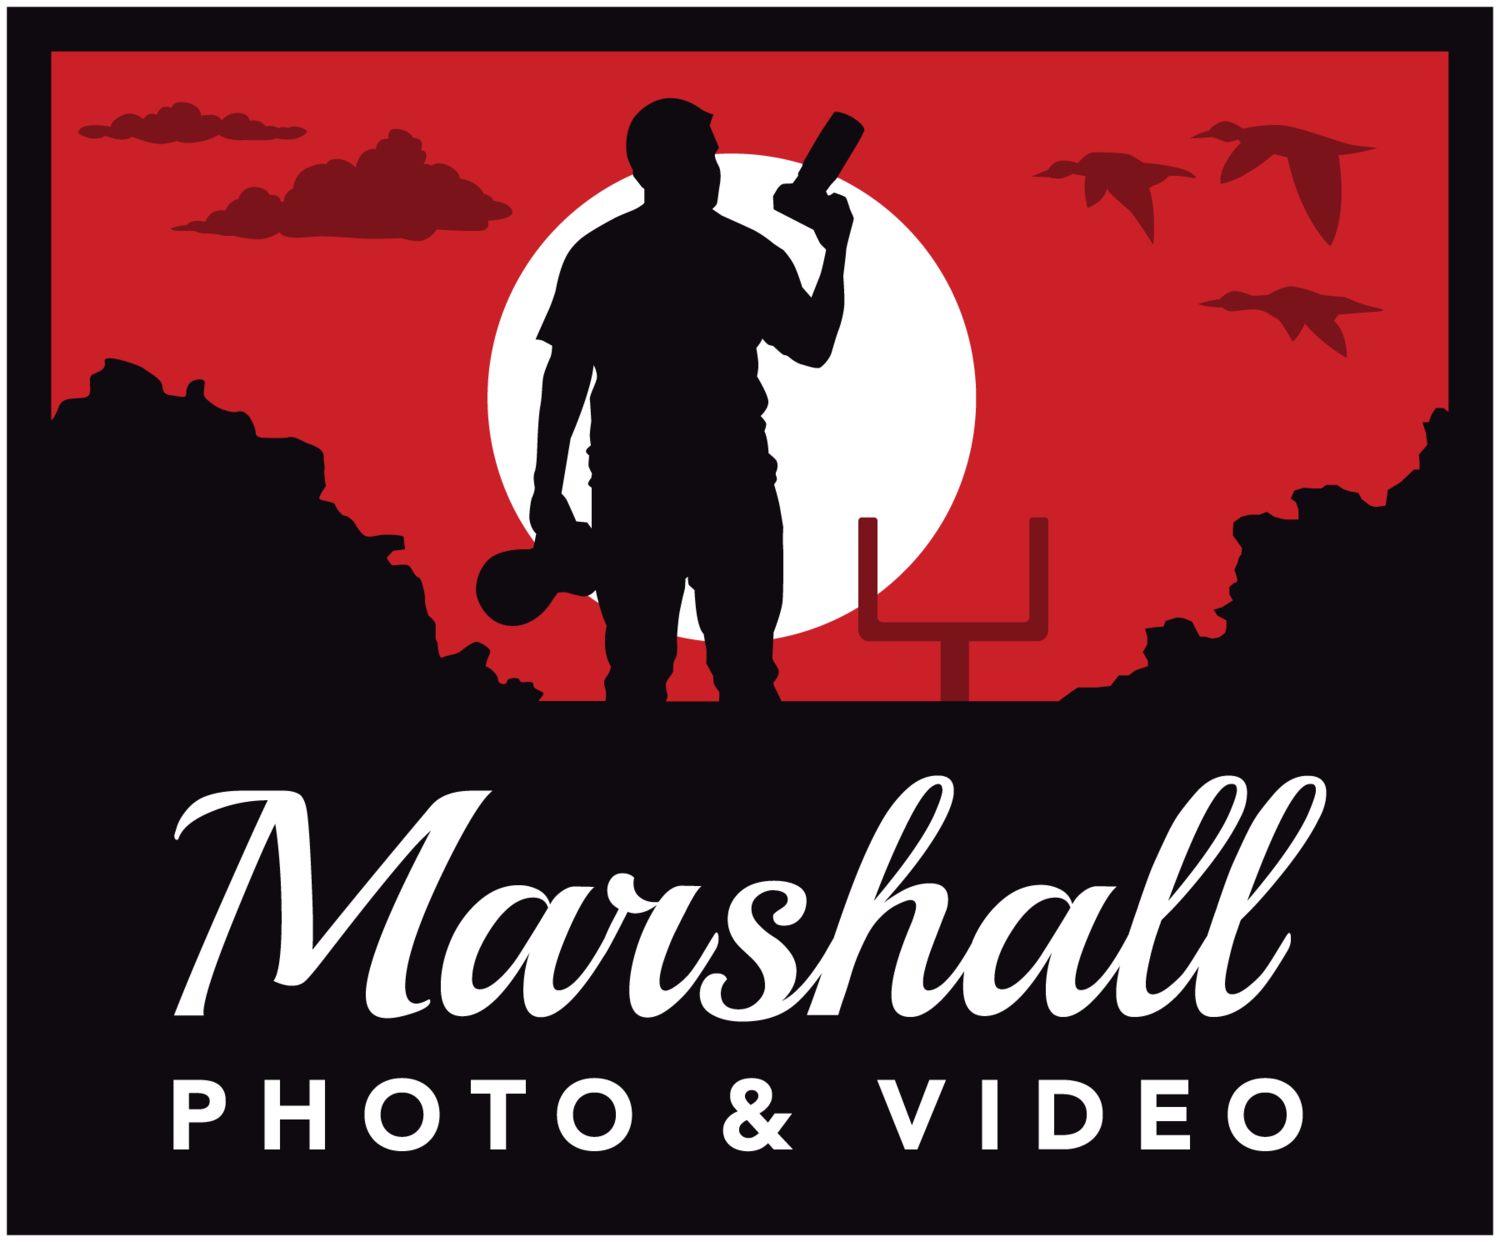 Samuel Marshall Photography